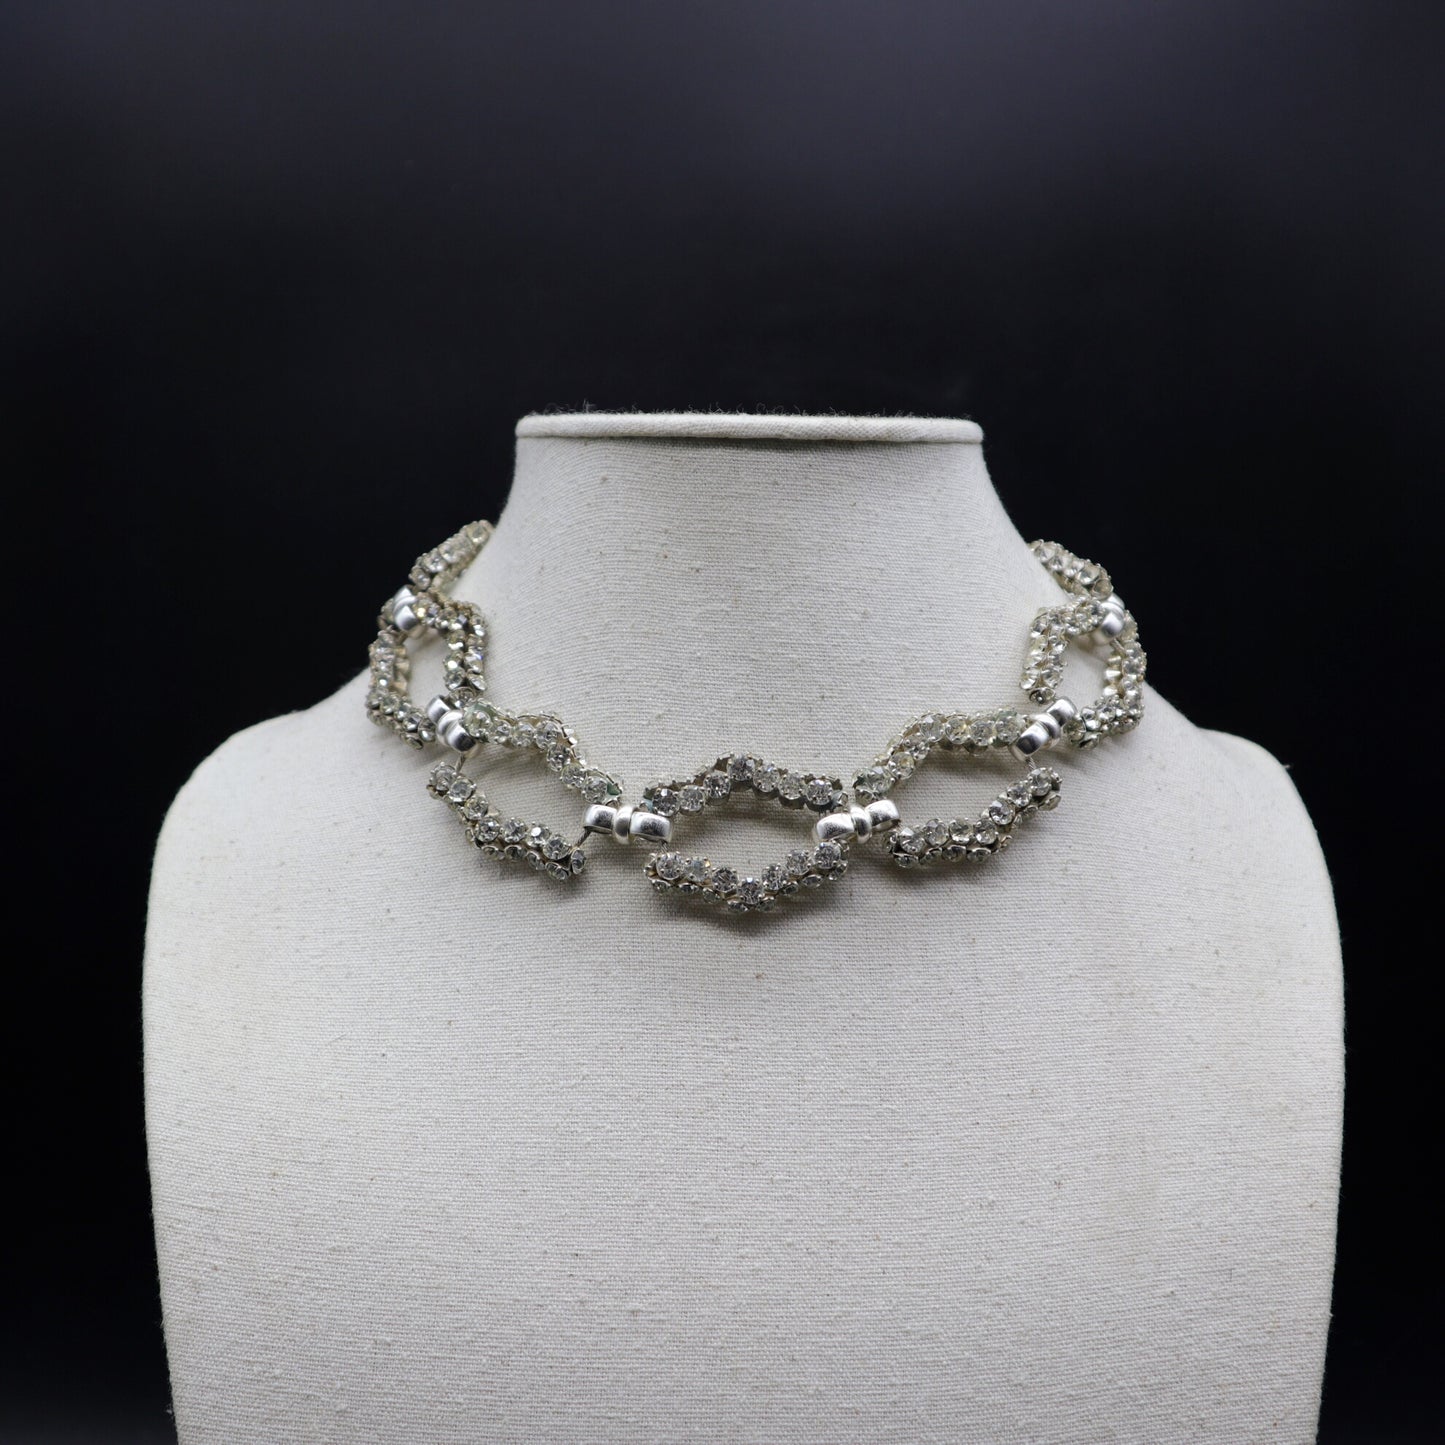 【Vintage】Crystal Necklace